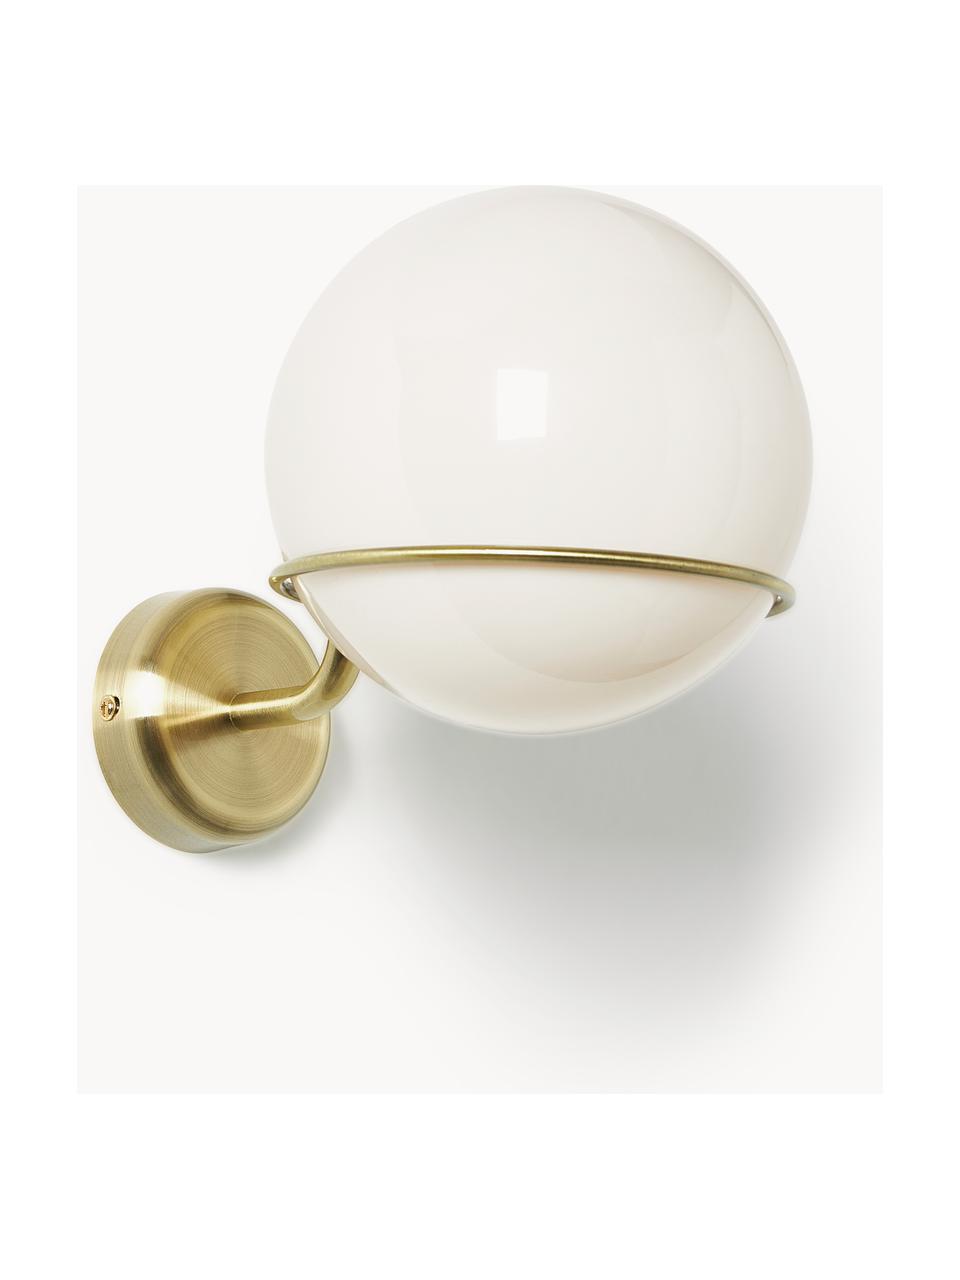 Aplique esferico de vidrio Carey, Pantalla: vidrio, Anclaje: metal, Blanco crema, dorado, Ø 16 x Al 18 cm